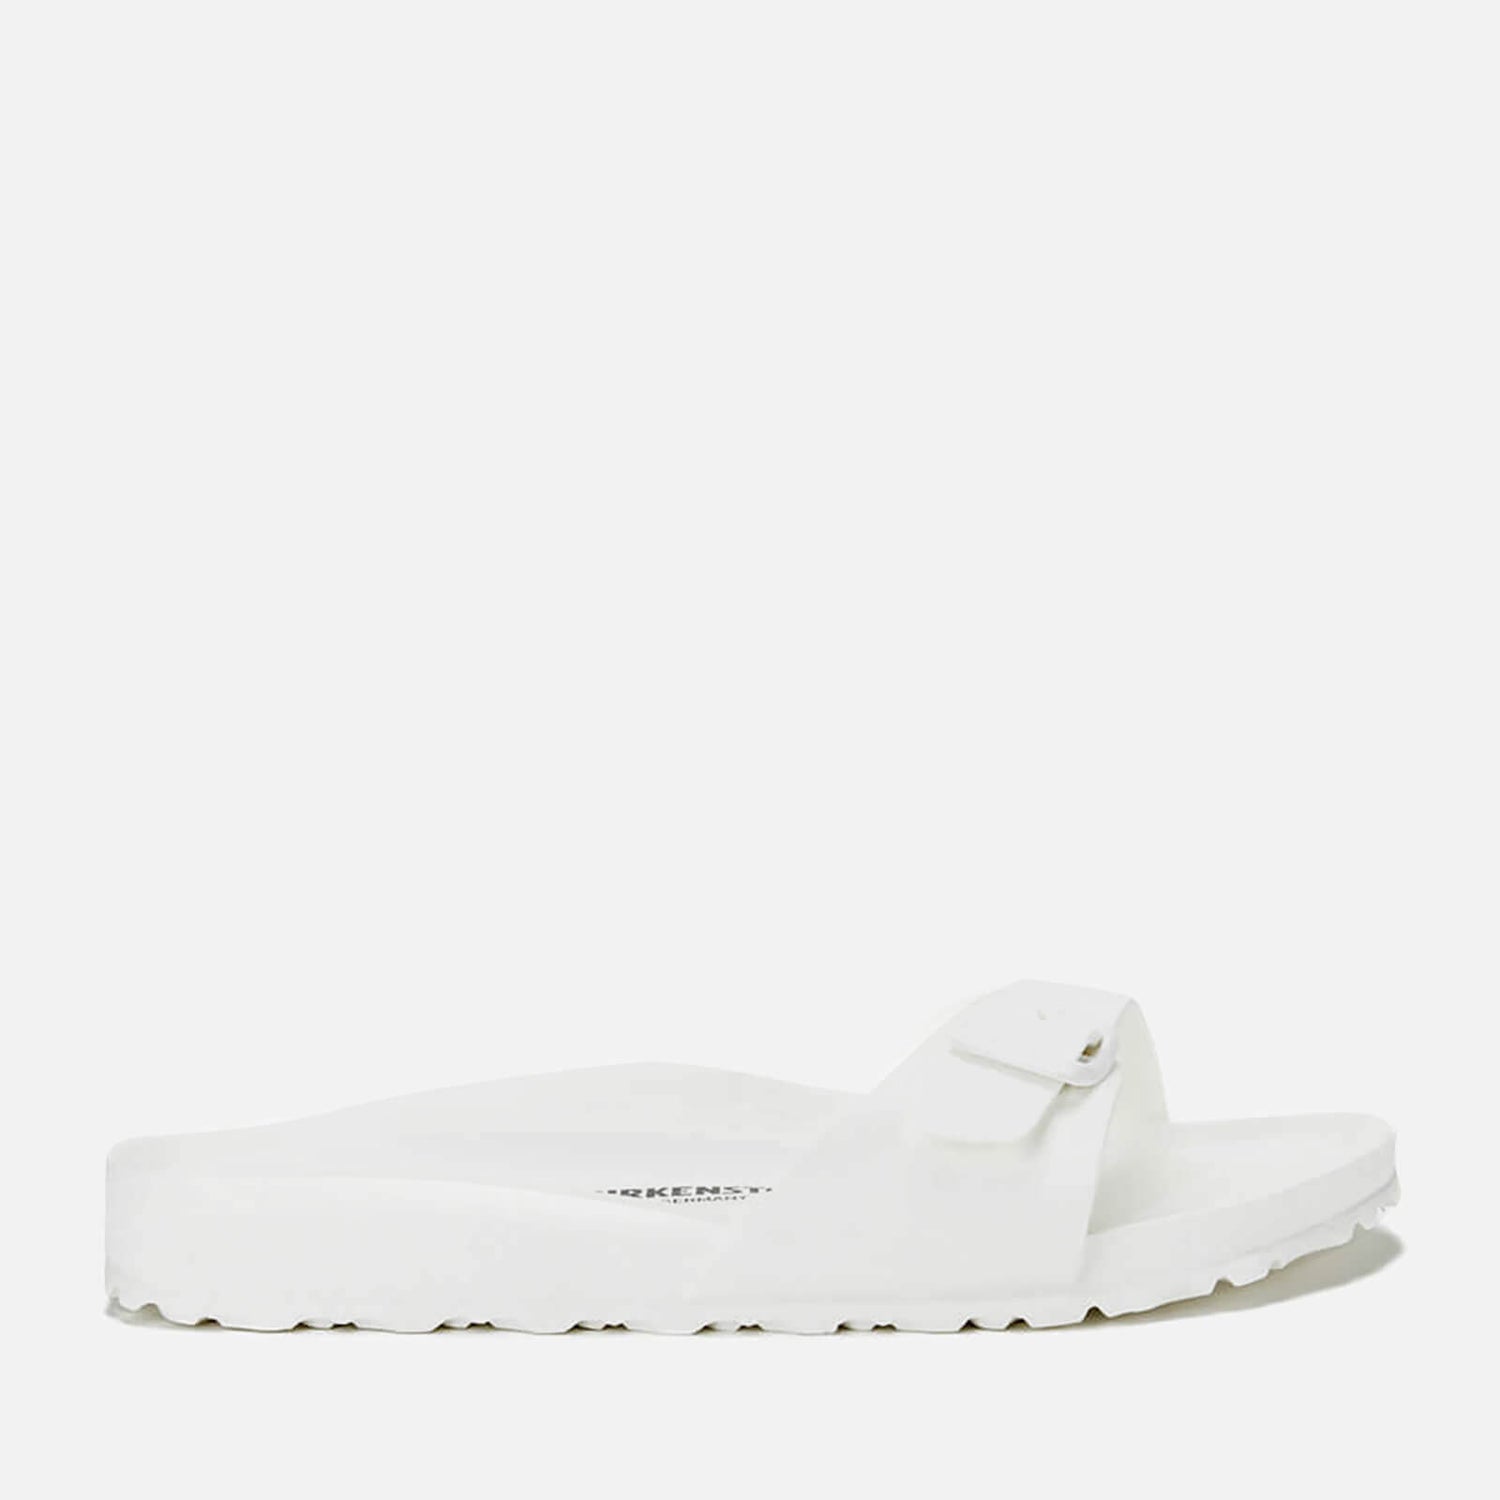 Birkenstock Women's Madrid Slim Fit Eva Single Strap Sandals - White - EU 36/UK 3.5